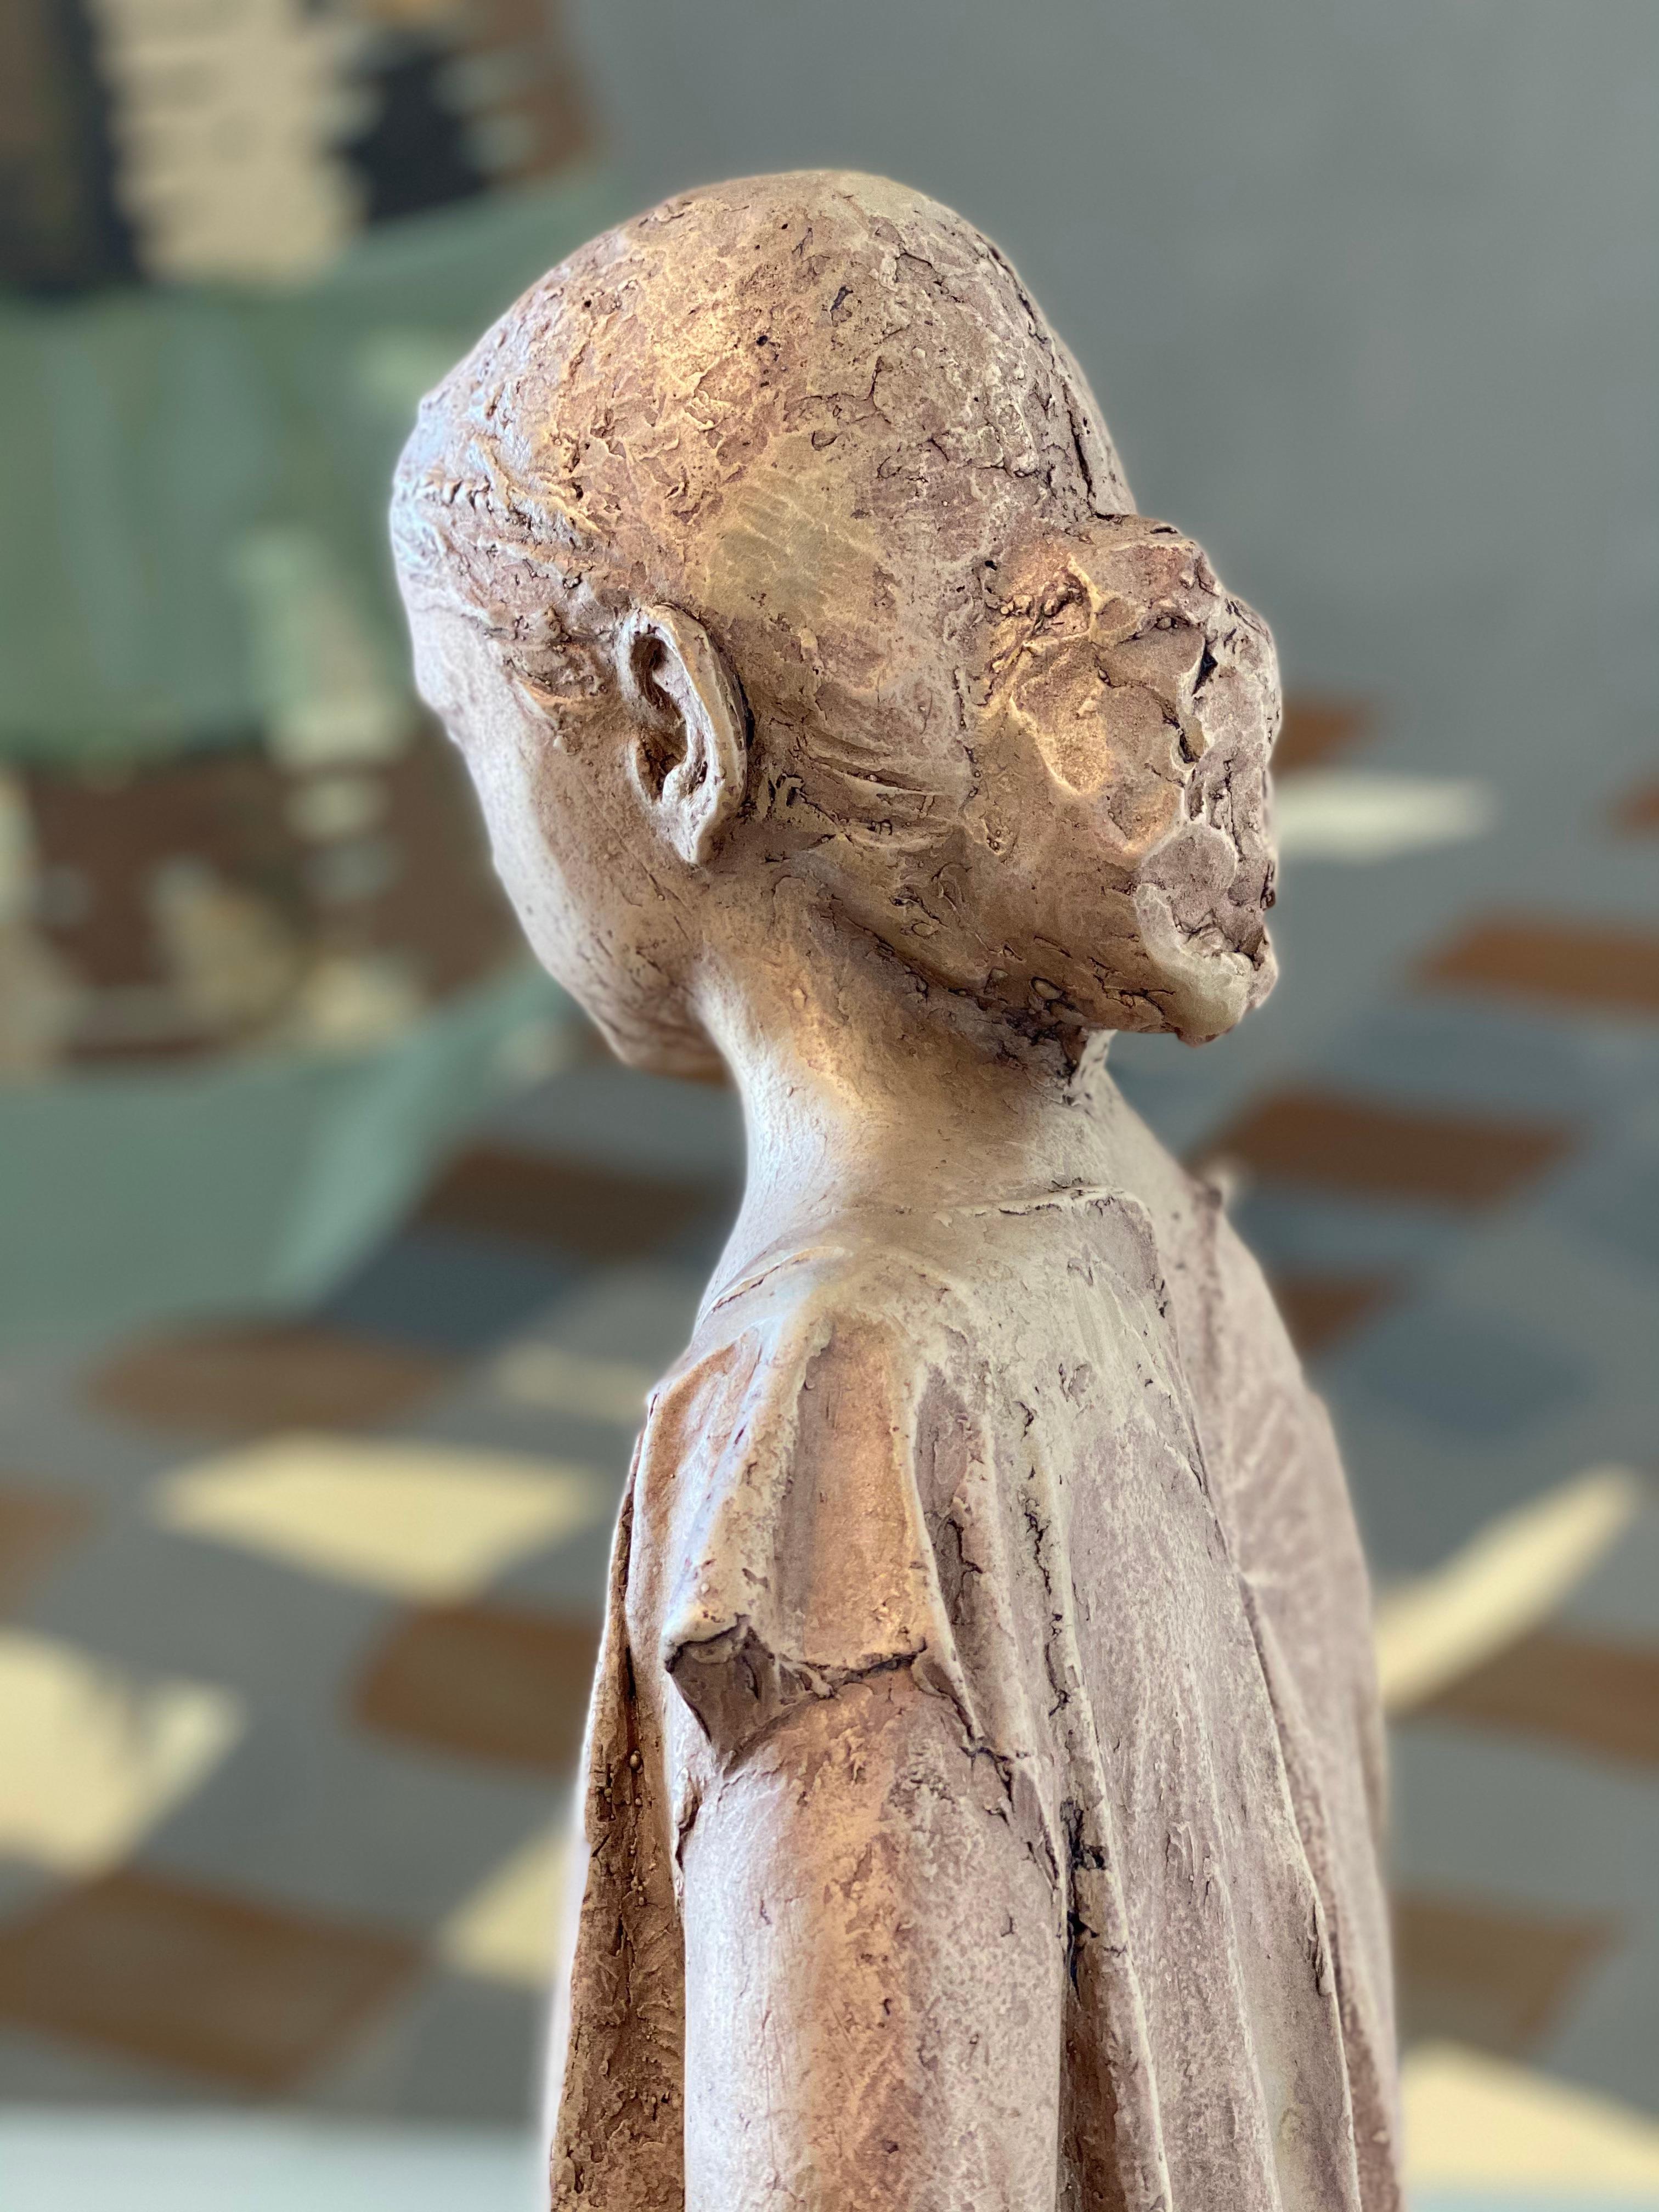 Girl, Walking- 21st Century Bronze Sculpture of a Young Girl in a Dress Walking. - Gold Figurative Sculpture by Pedro Quesada Sierra